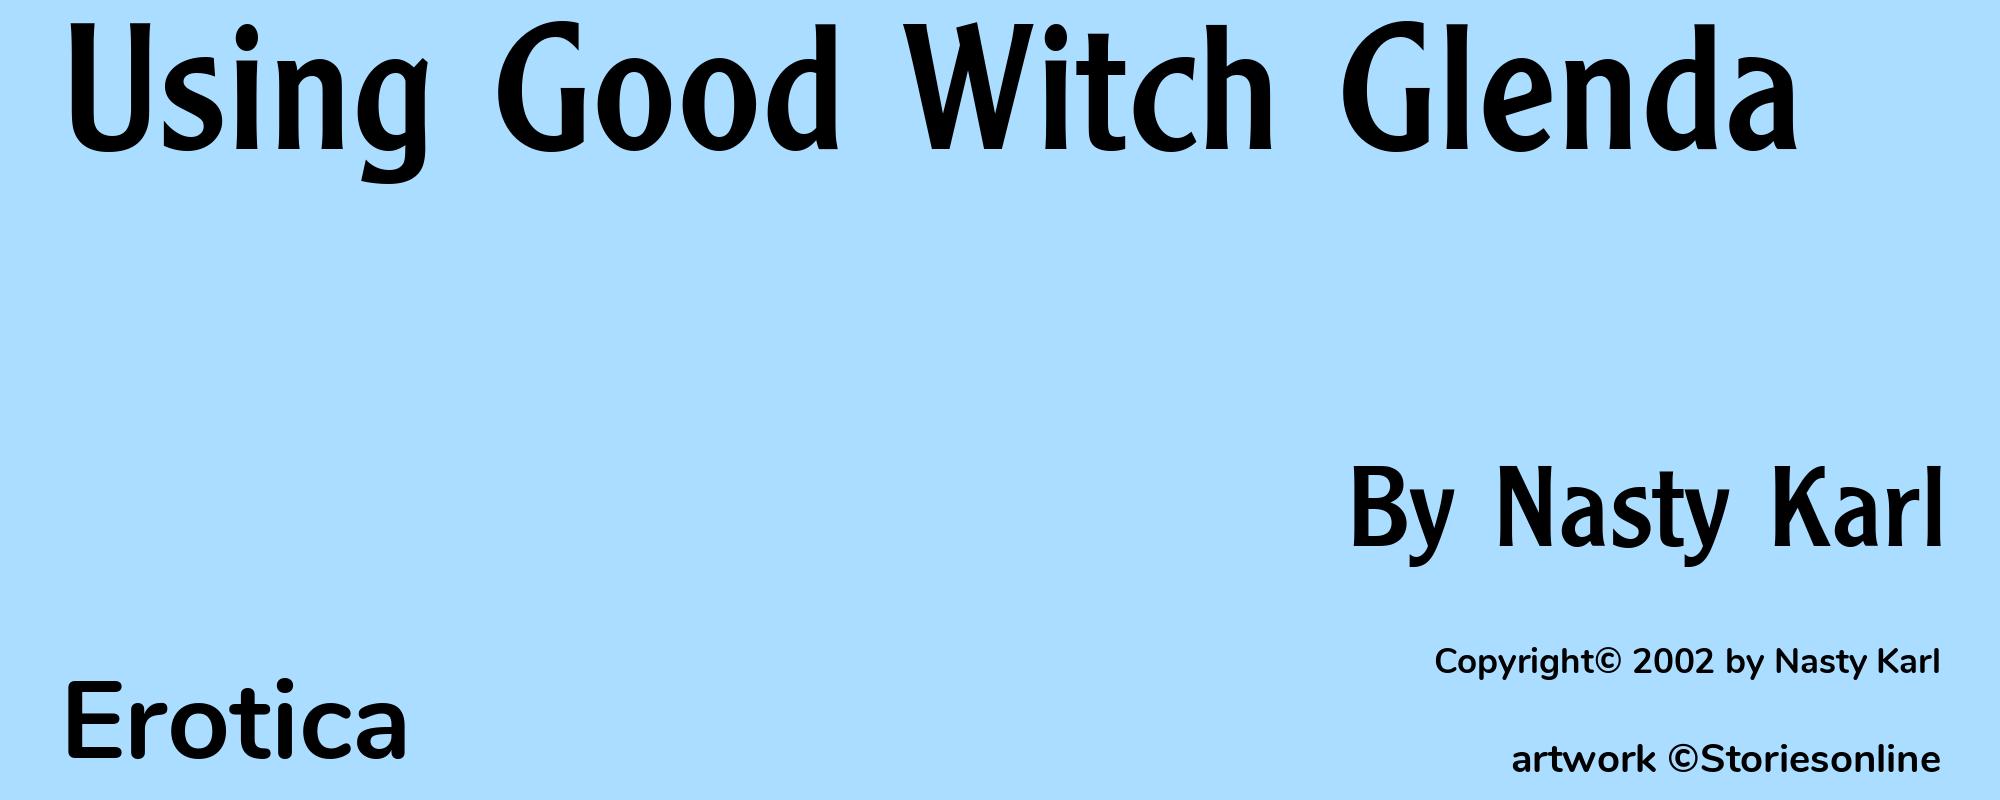 Using Good Witch Glenda - Cover